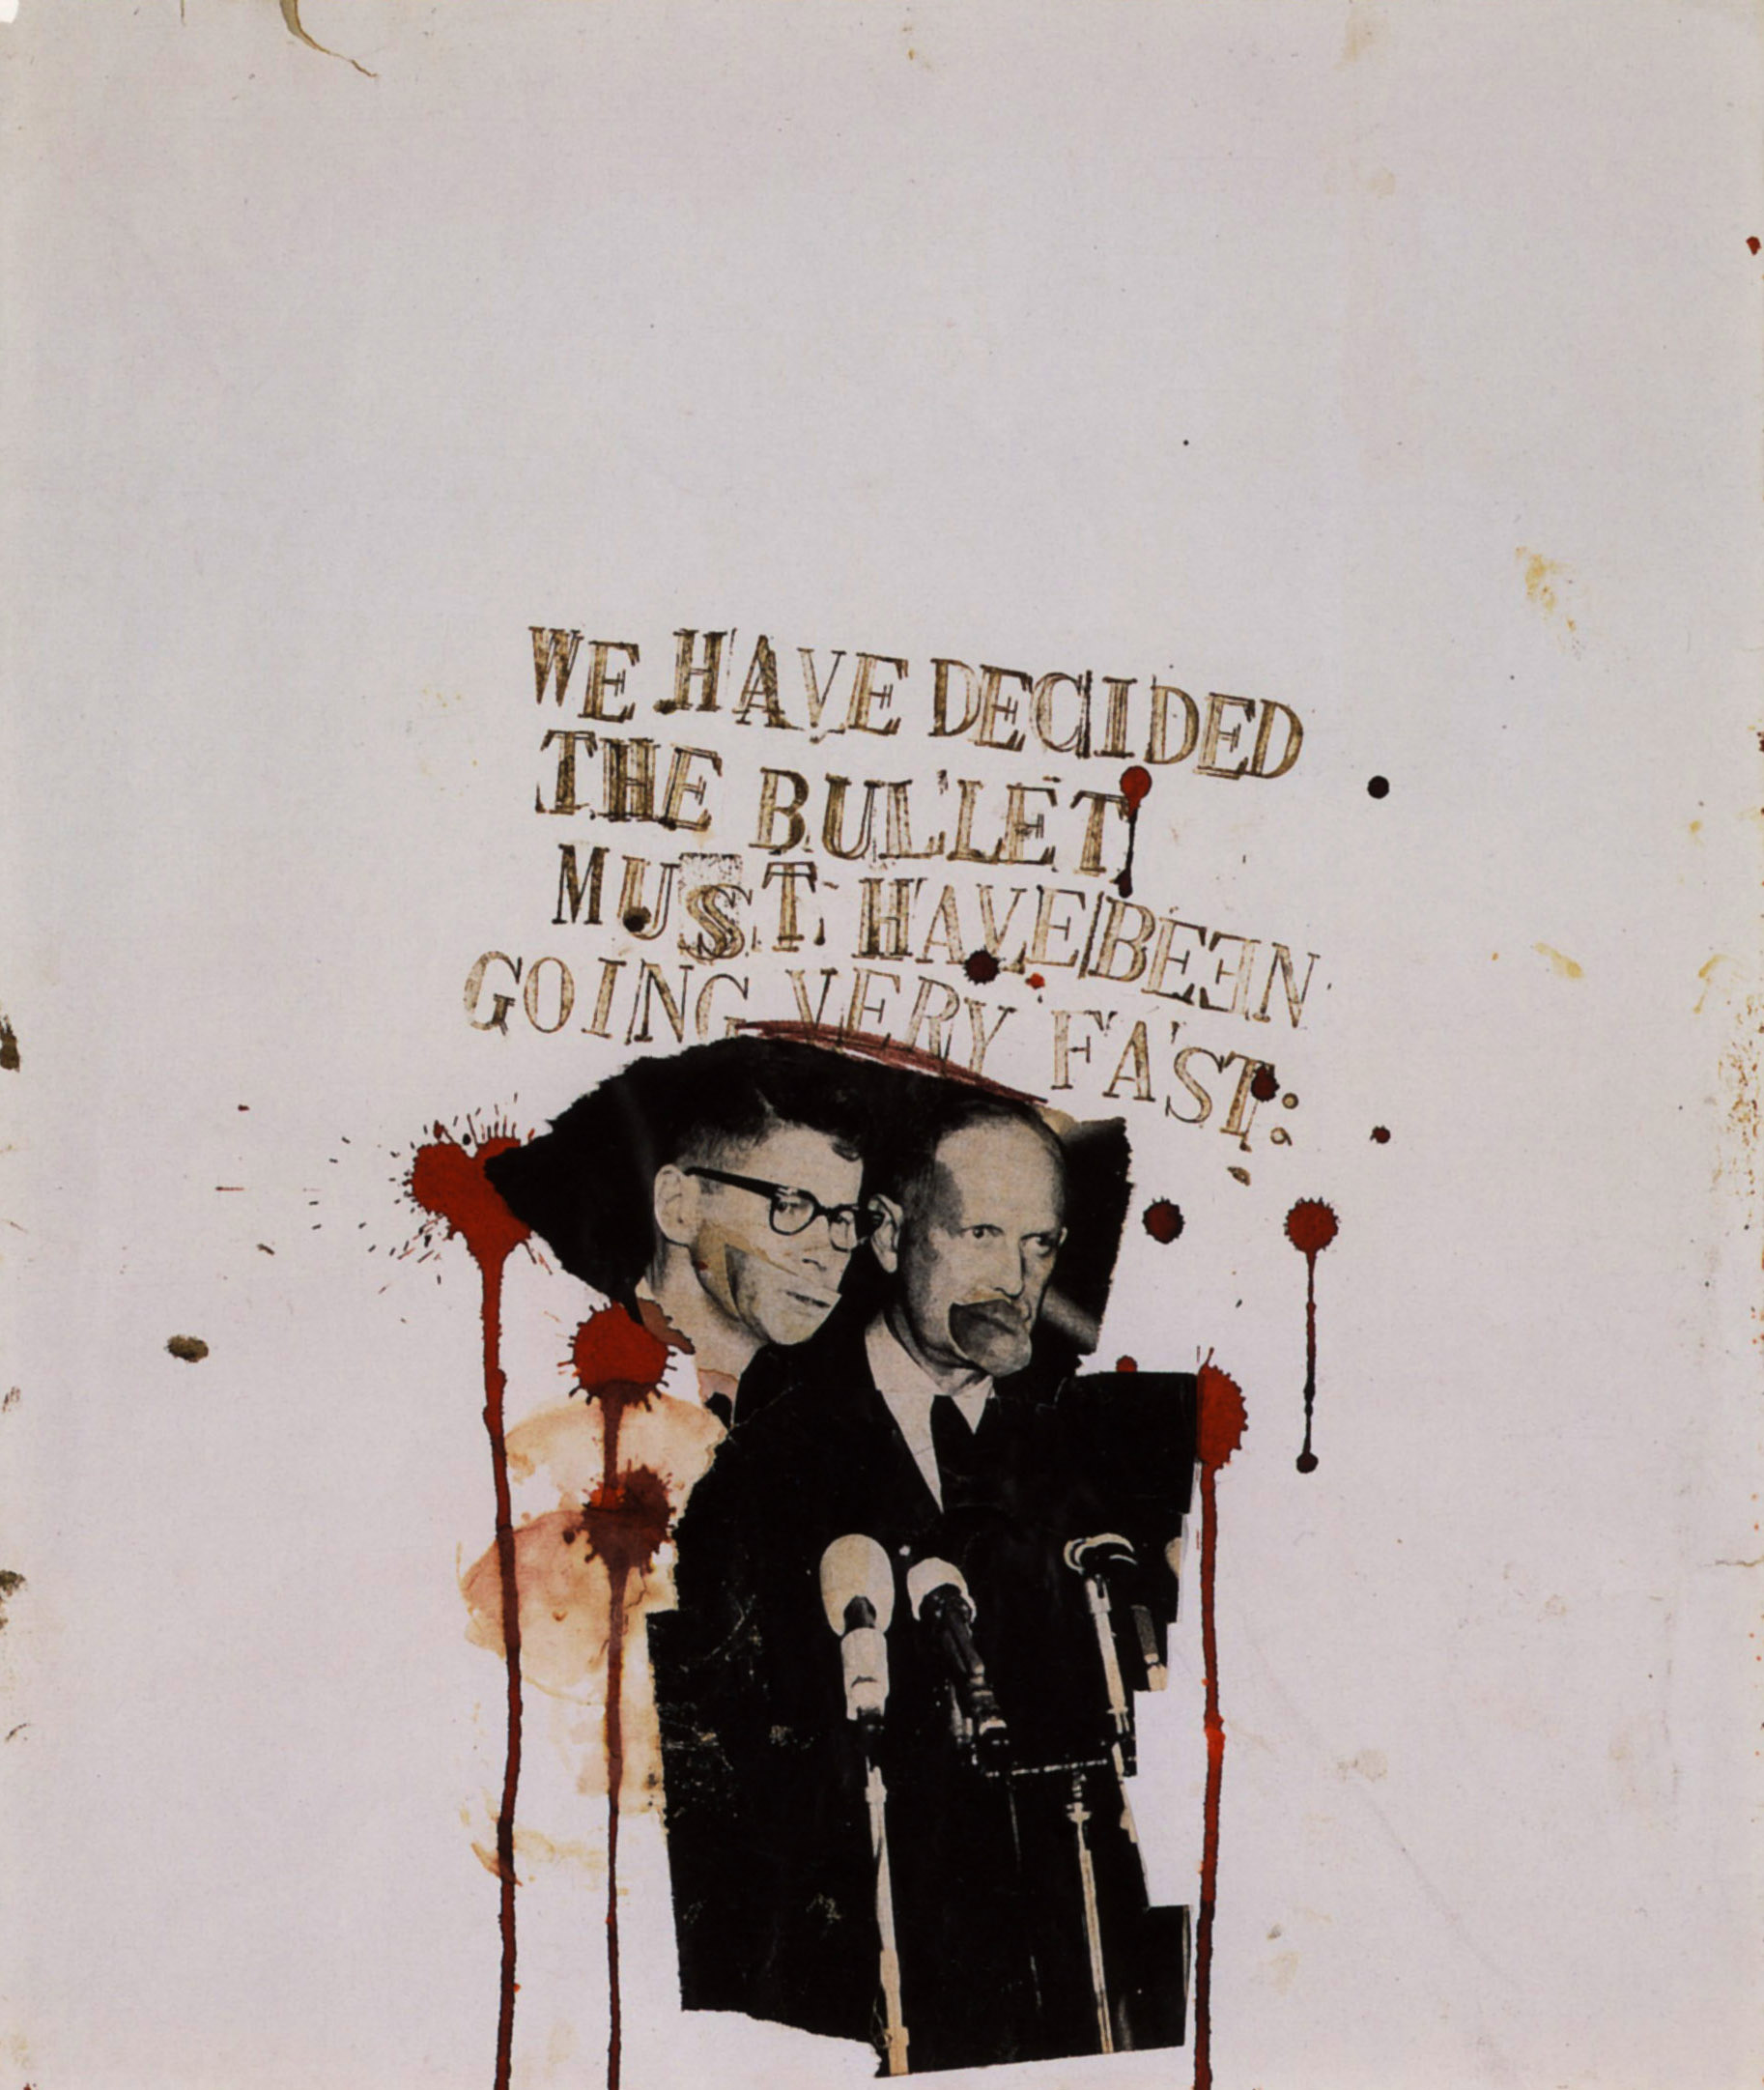 Untitled, 1980 - Jean-Michel Basquiat - WikiArt.org